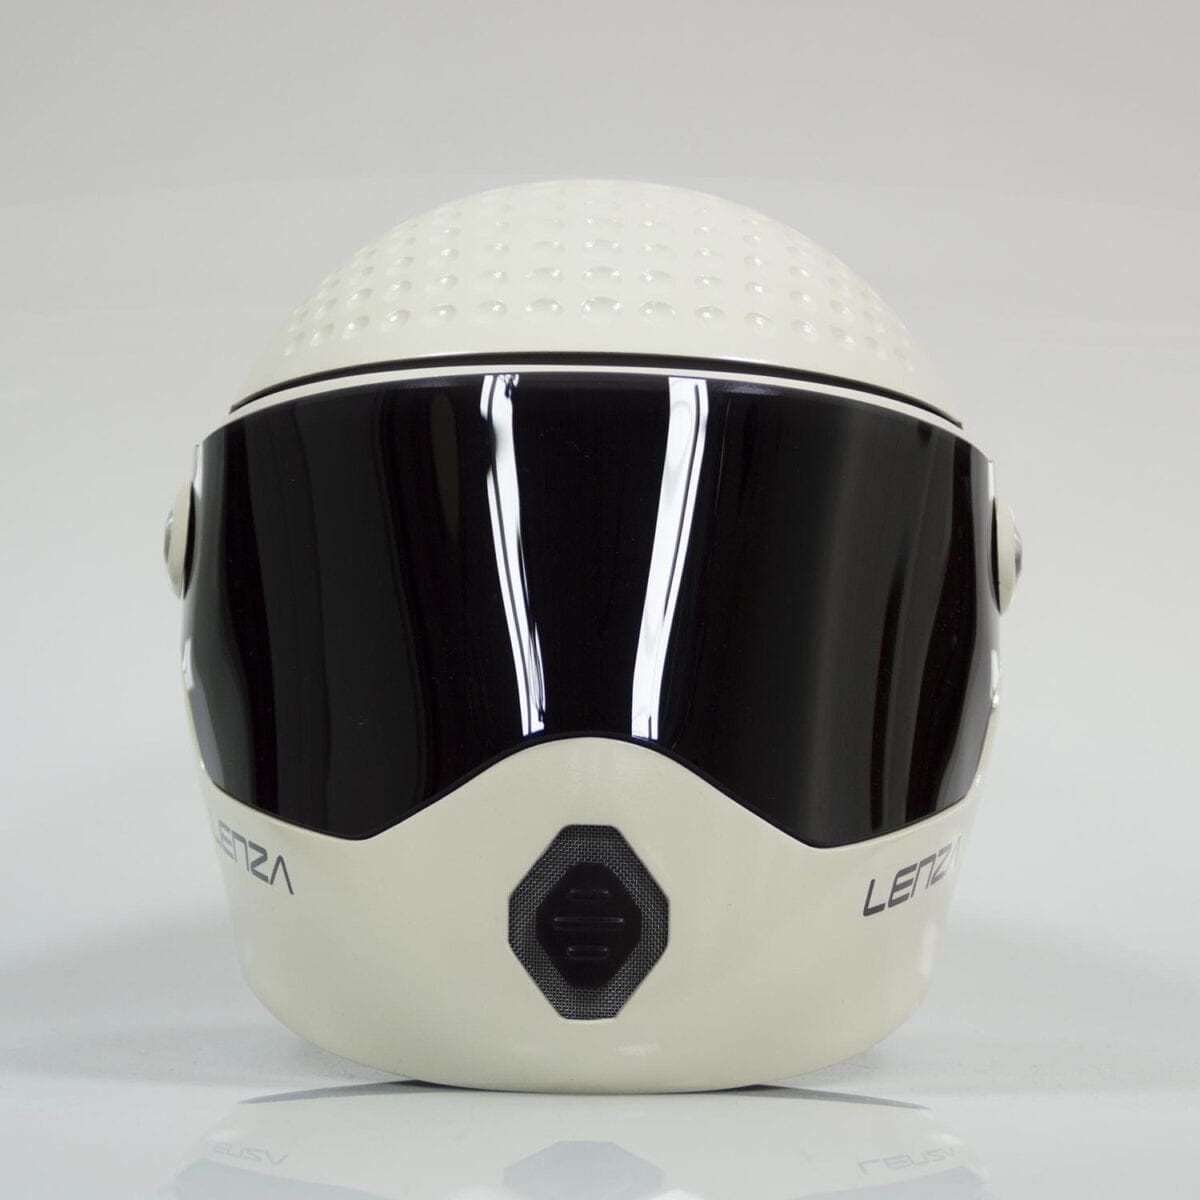 009_Lenza-One-helmet-003